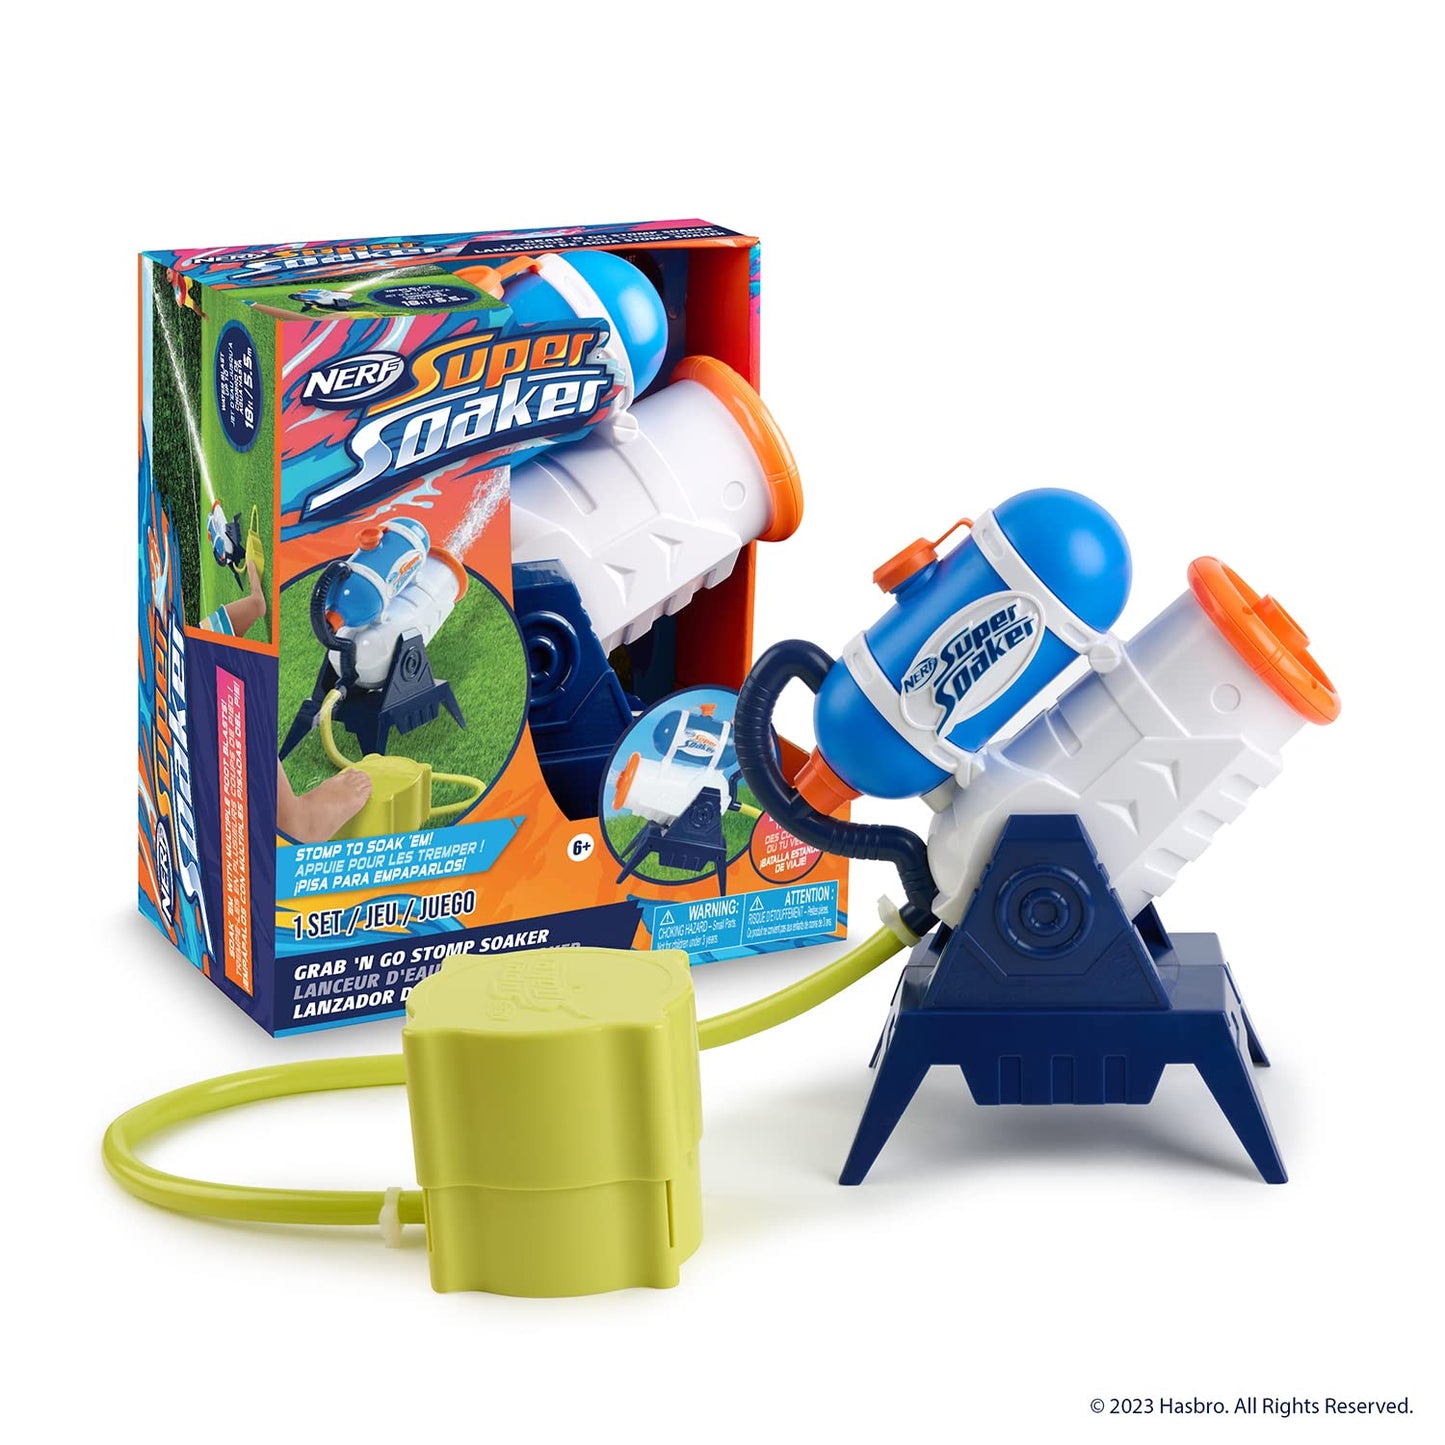 NERF Super Soaker Grab ‘N Go Stomp Soaker Blasting Machine – Outdoor Water Games